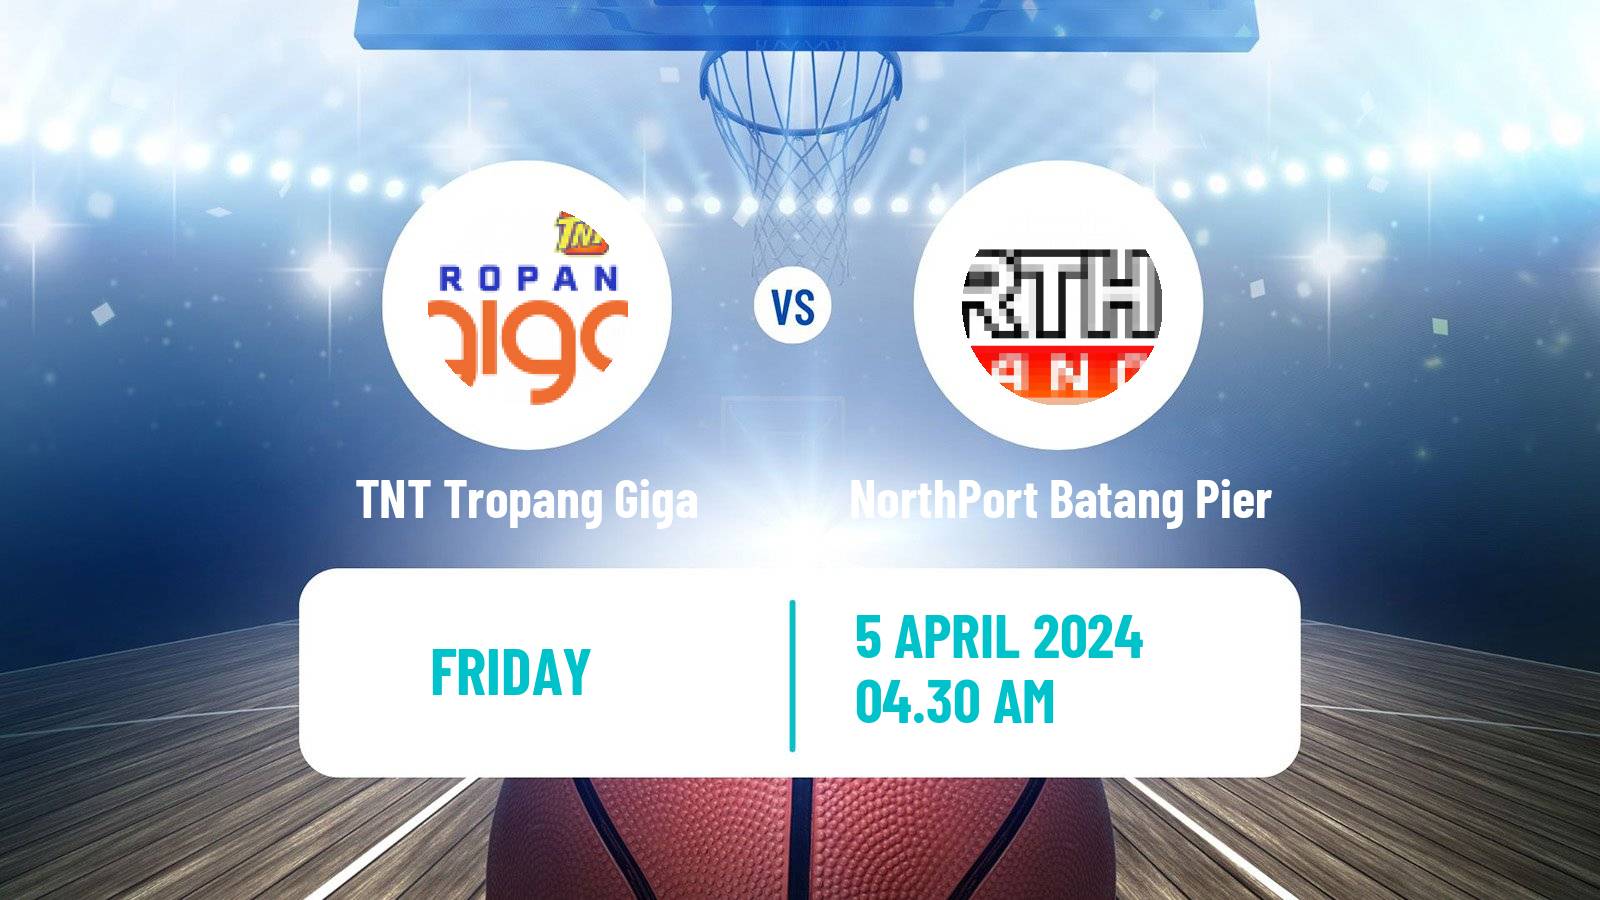 Basketball Philippines Cup TNT Tropang Giga - NorthPort Batang Pier